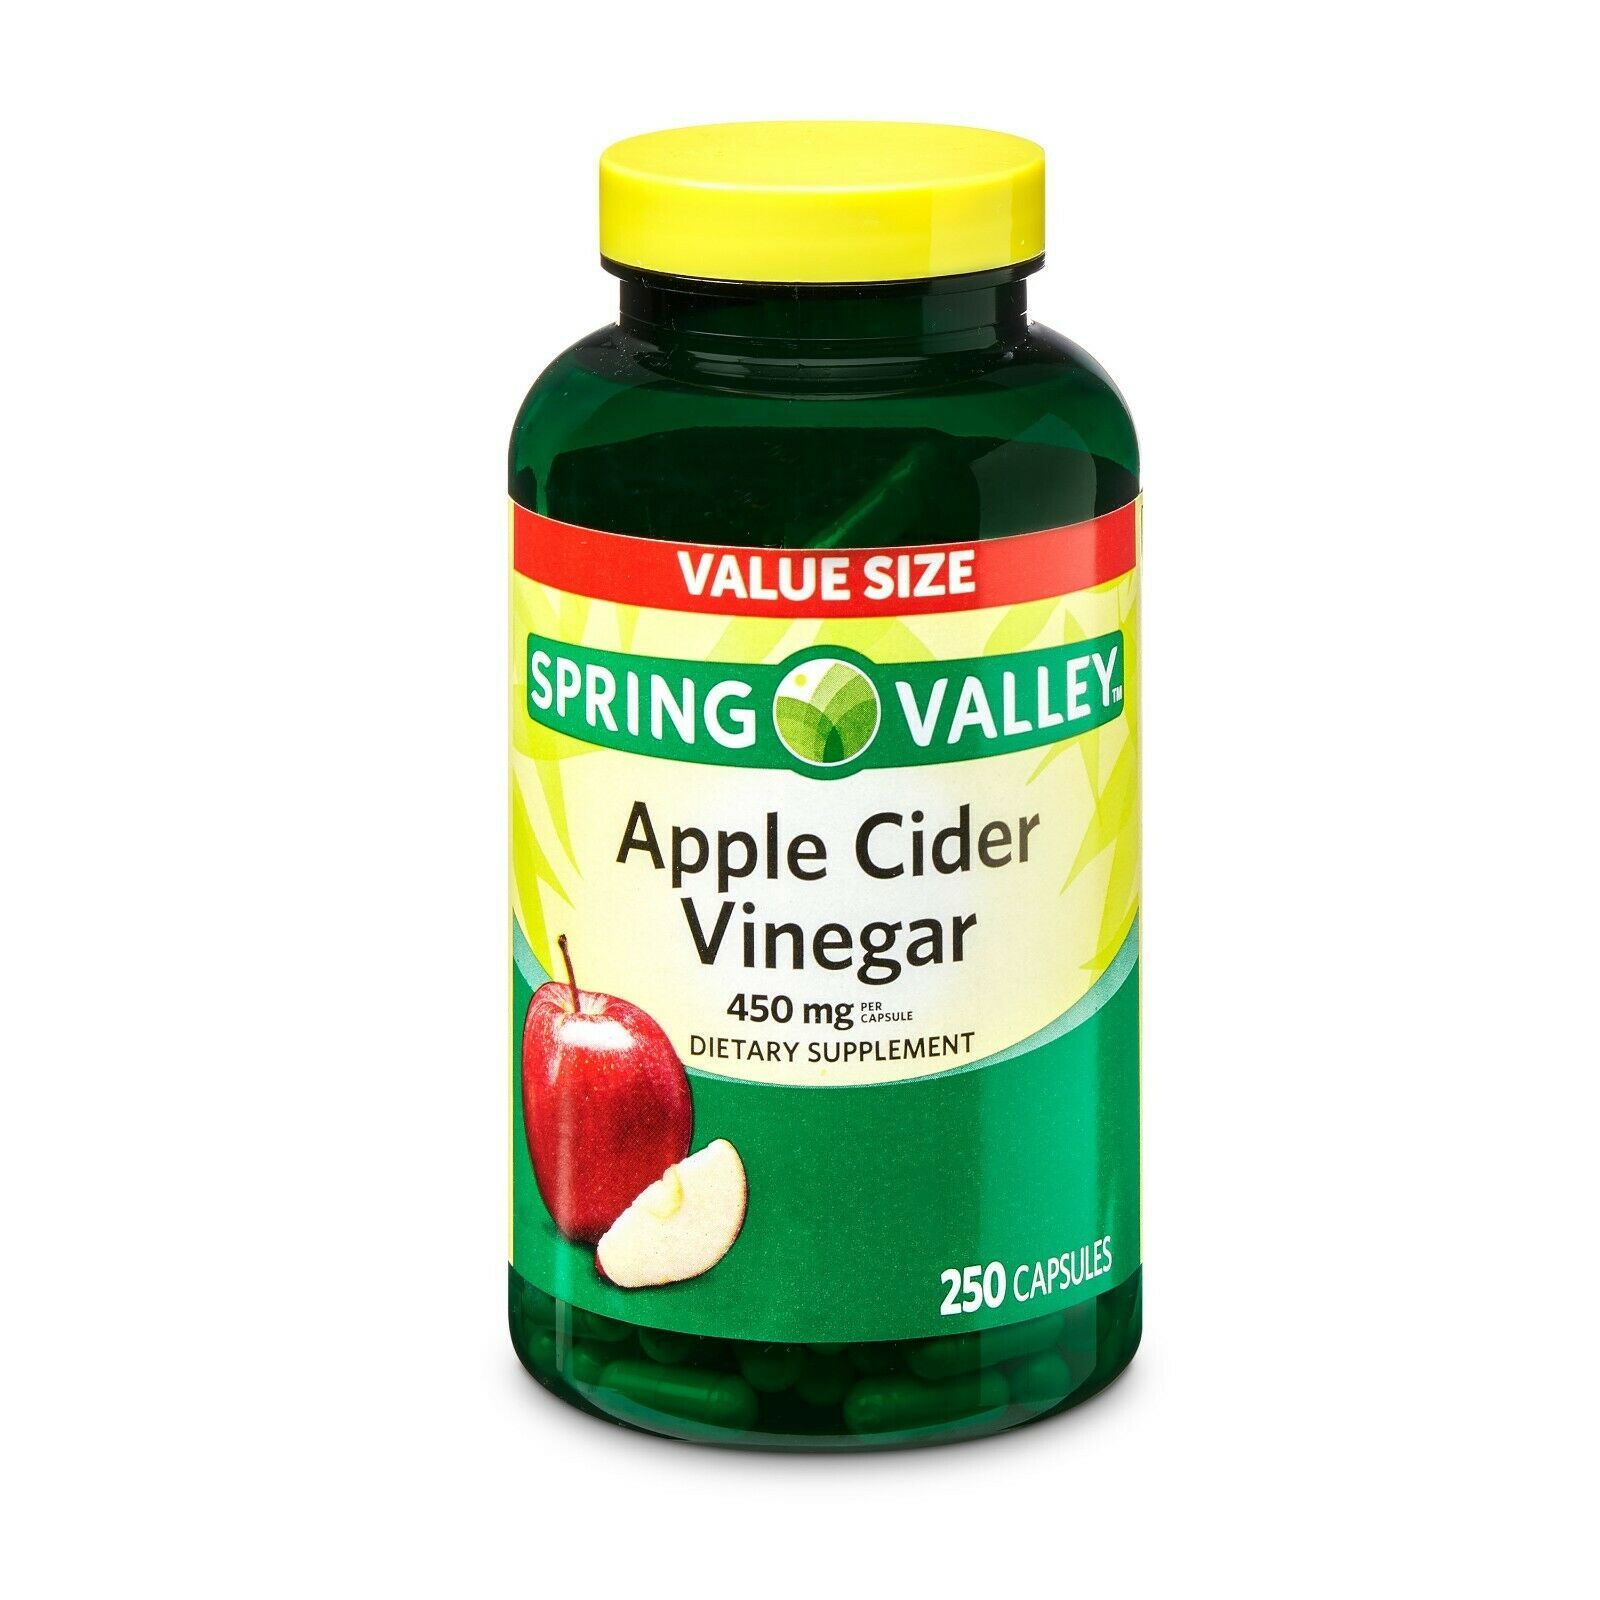 Spring Valley Apple Cider Vinegar Dietary Supplement Value Size 450 mg 250 ct..+ - $29.69